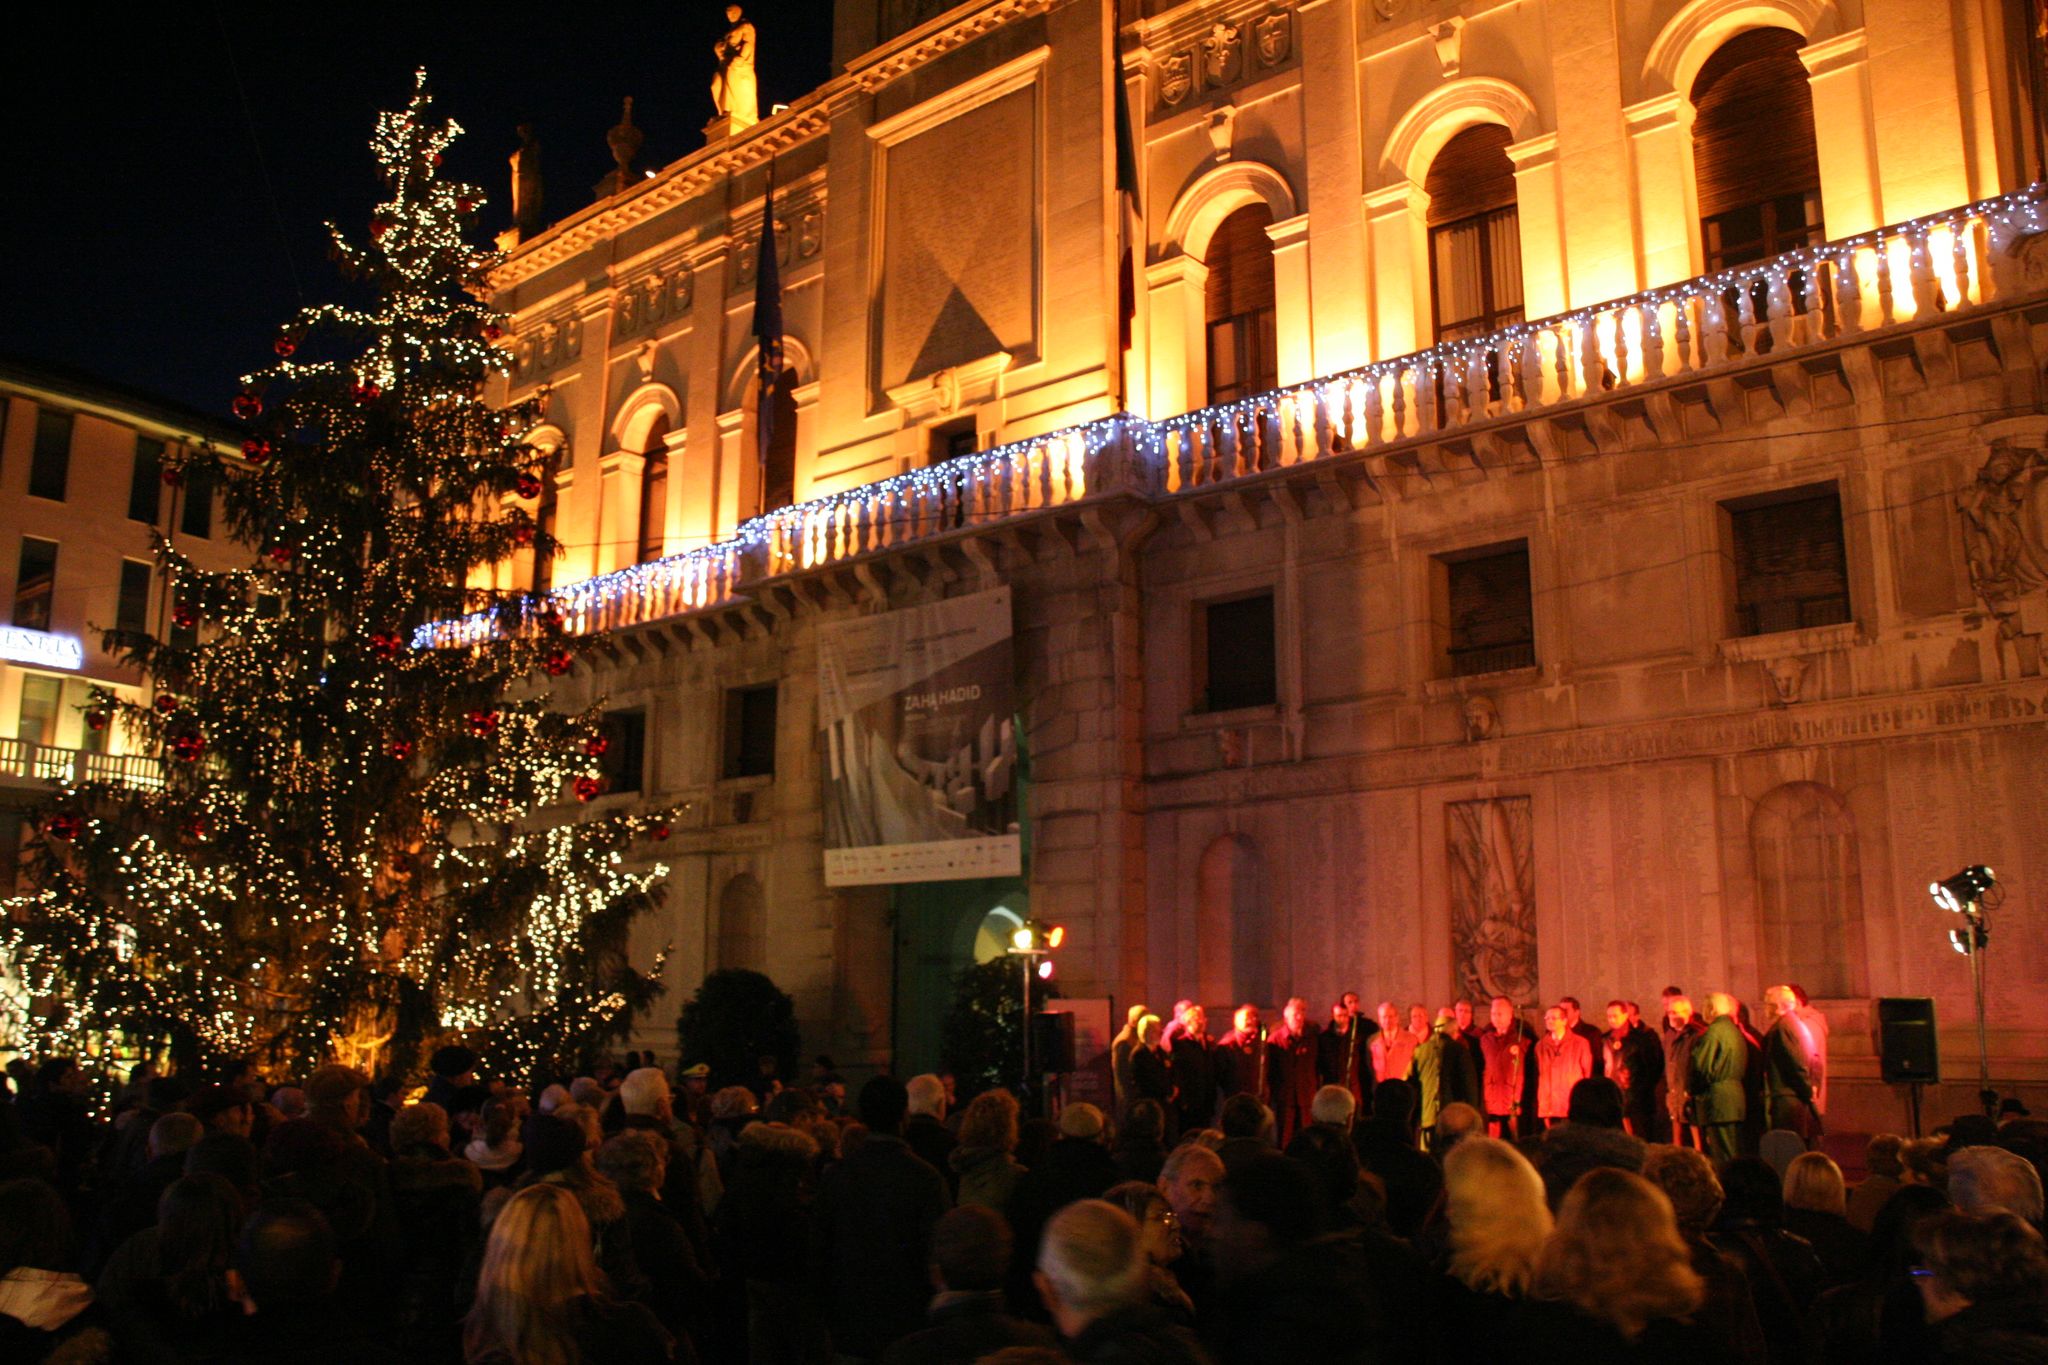 Concerto davanti Palazzo Moroni - Natale 2009 - 05-12-2009 - 109.JPG